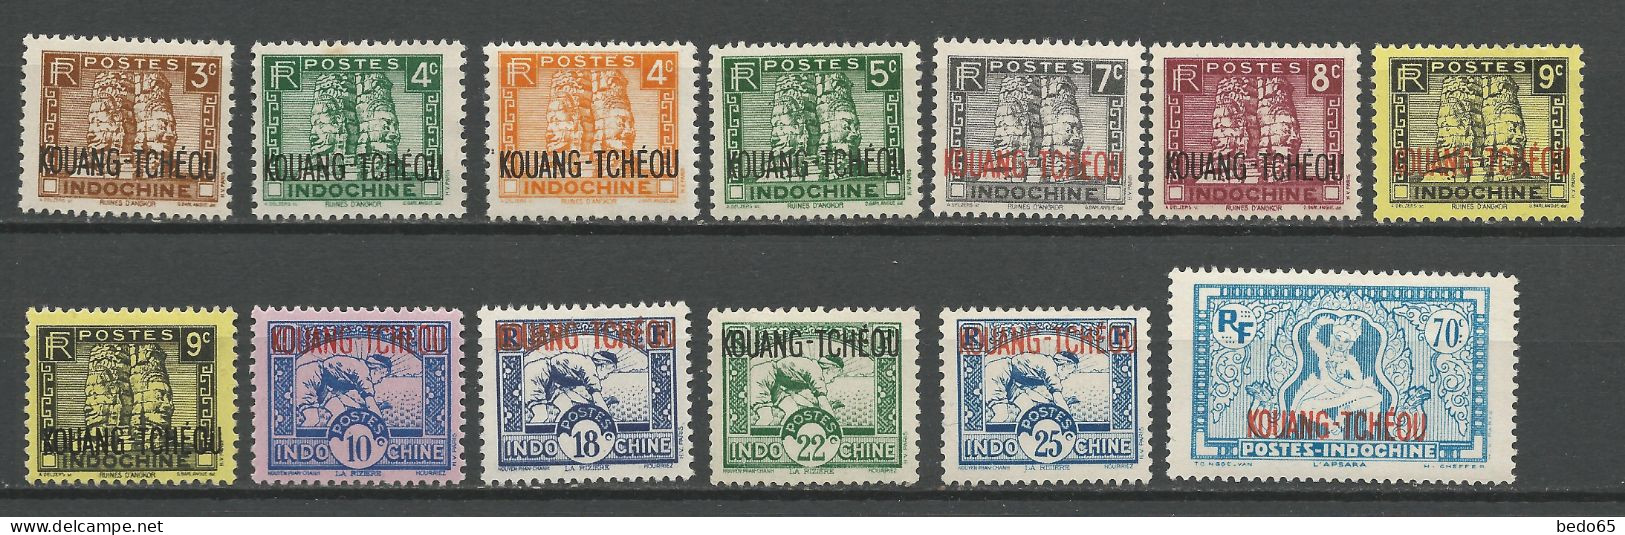 KOUANG-TCHEOU N° 125 à 134 NEUF* AVEC OU TRACE DE CHARNIERE  / Hinge  / MH - Unused Stamps